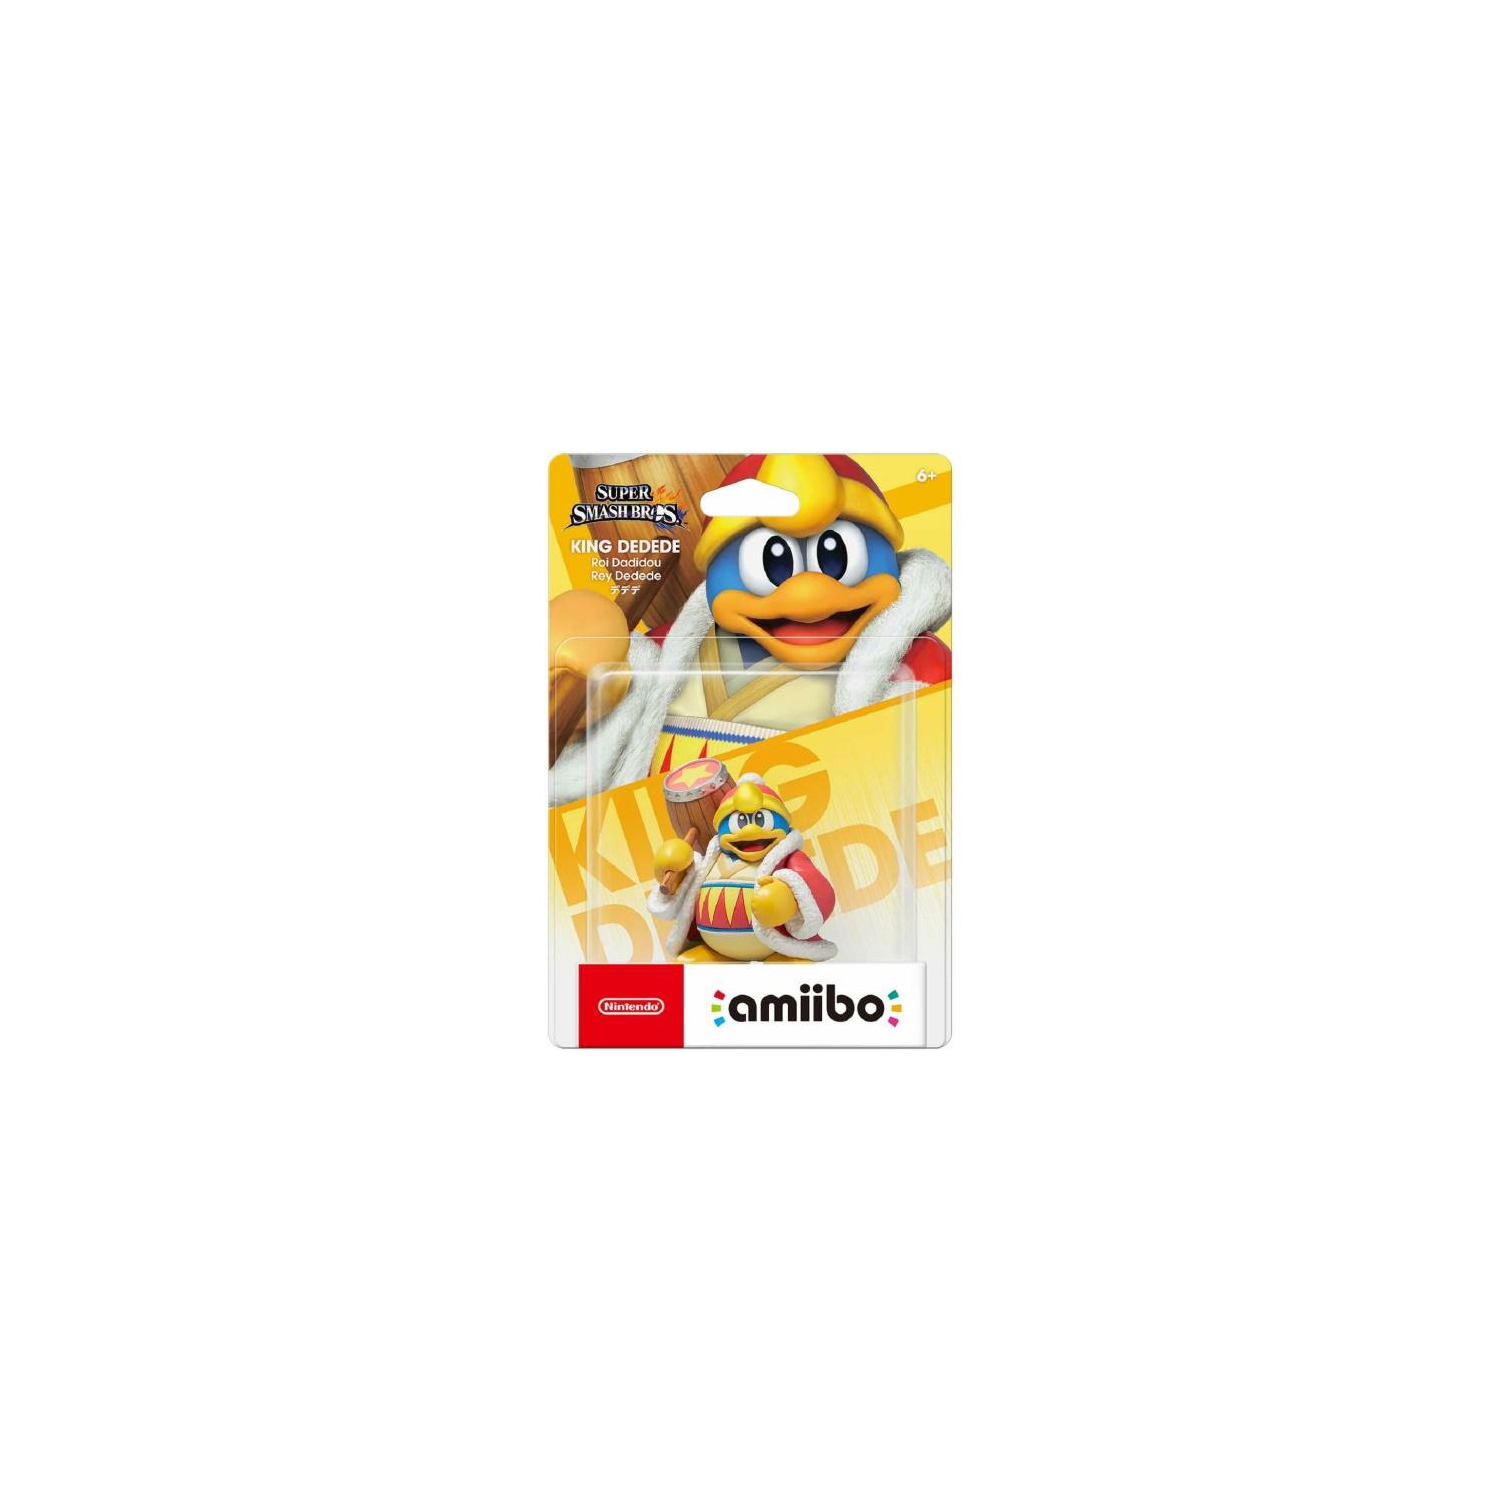 Nintendo King Dedede Amiibo (Super Smash Bros. Series) For Wii U